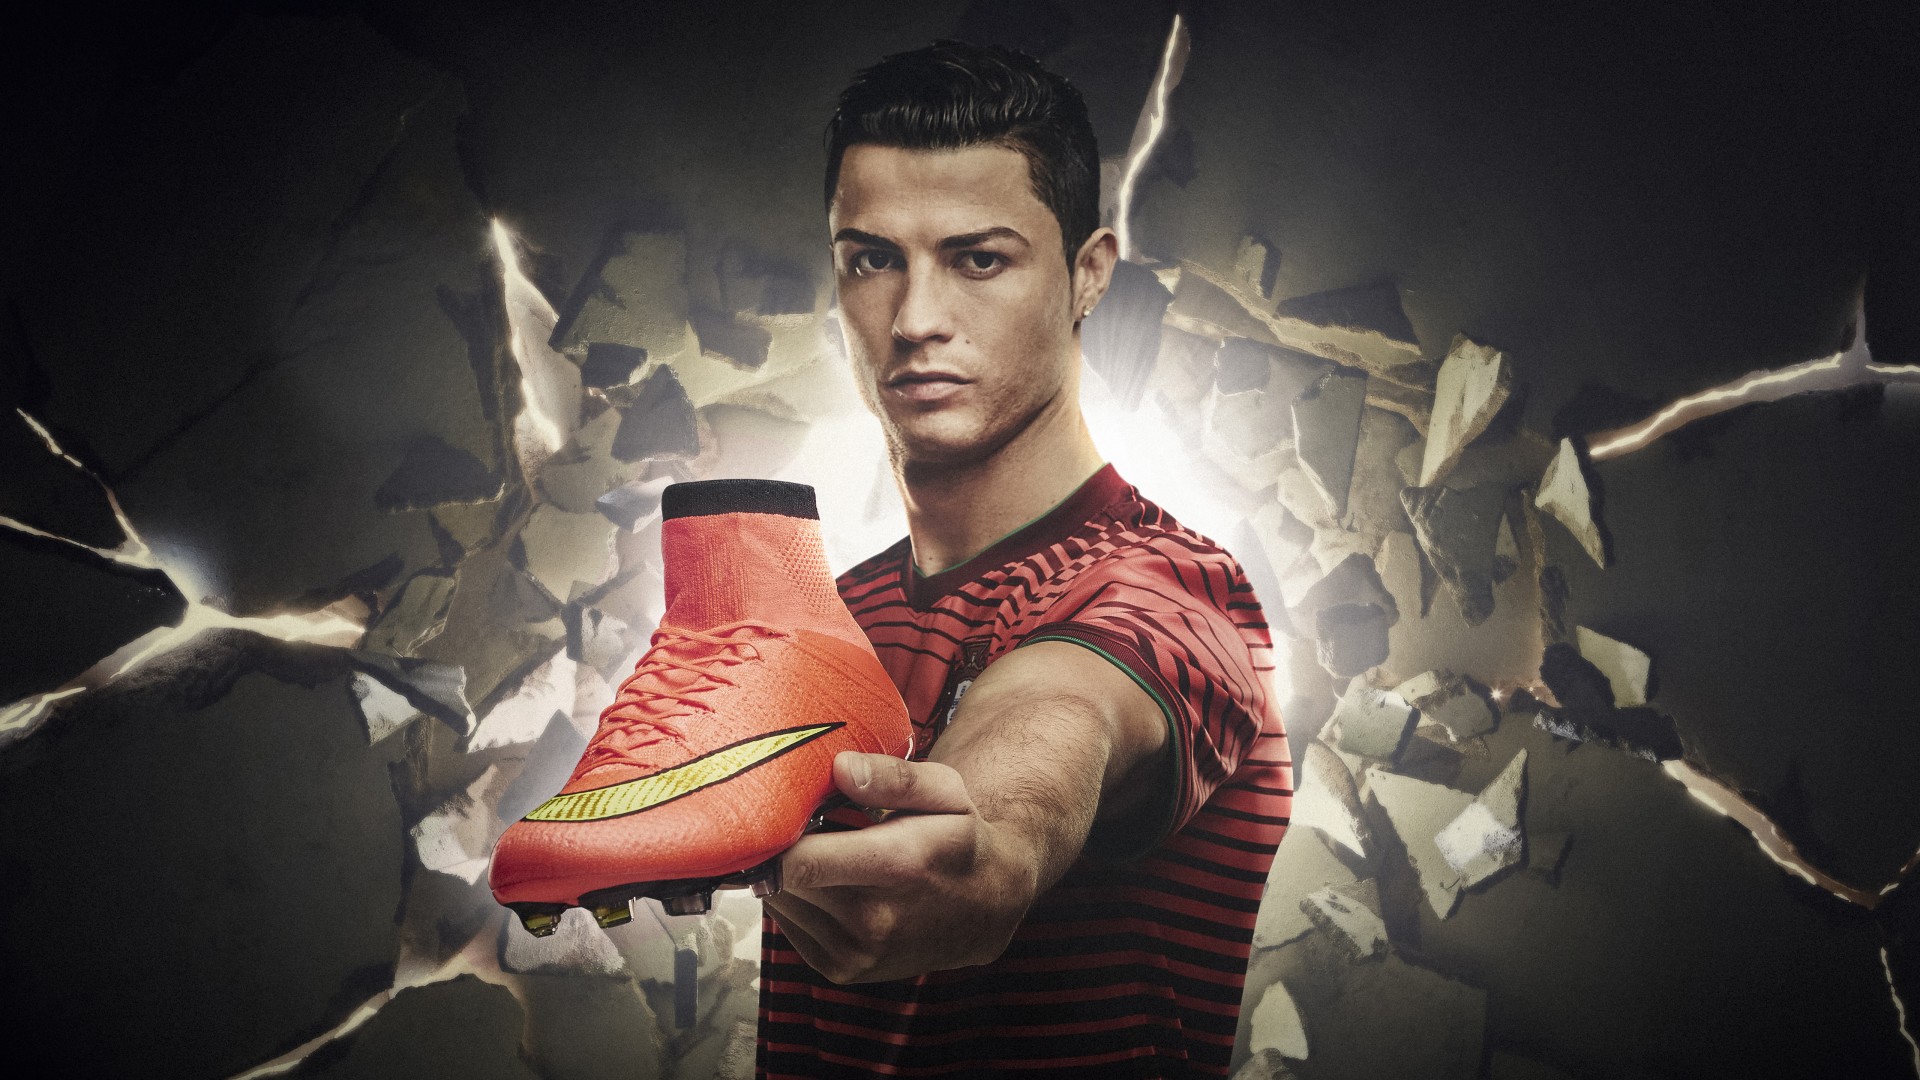 Cristiano Ronaldo Wallpaper HD Background Image Pics Photos